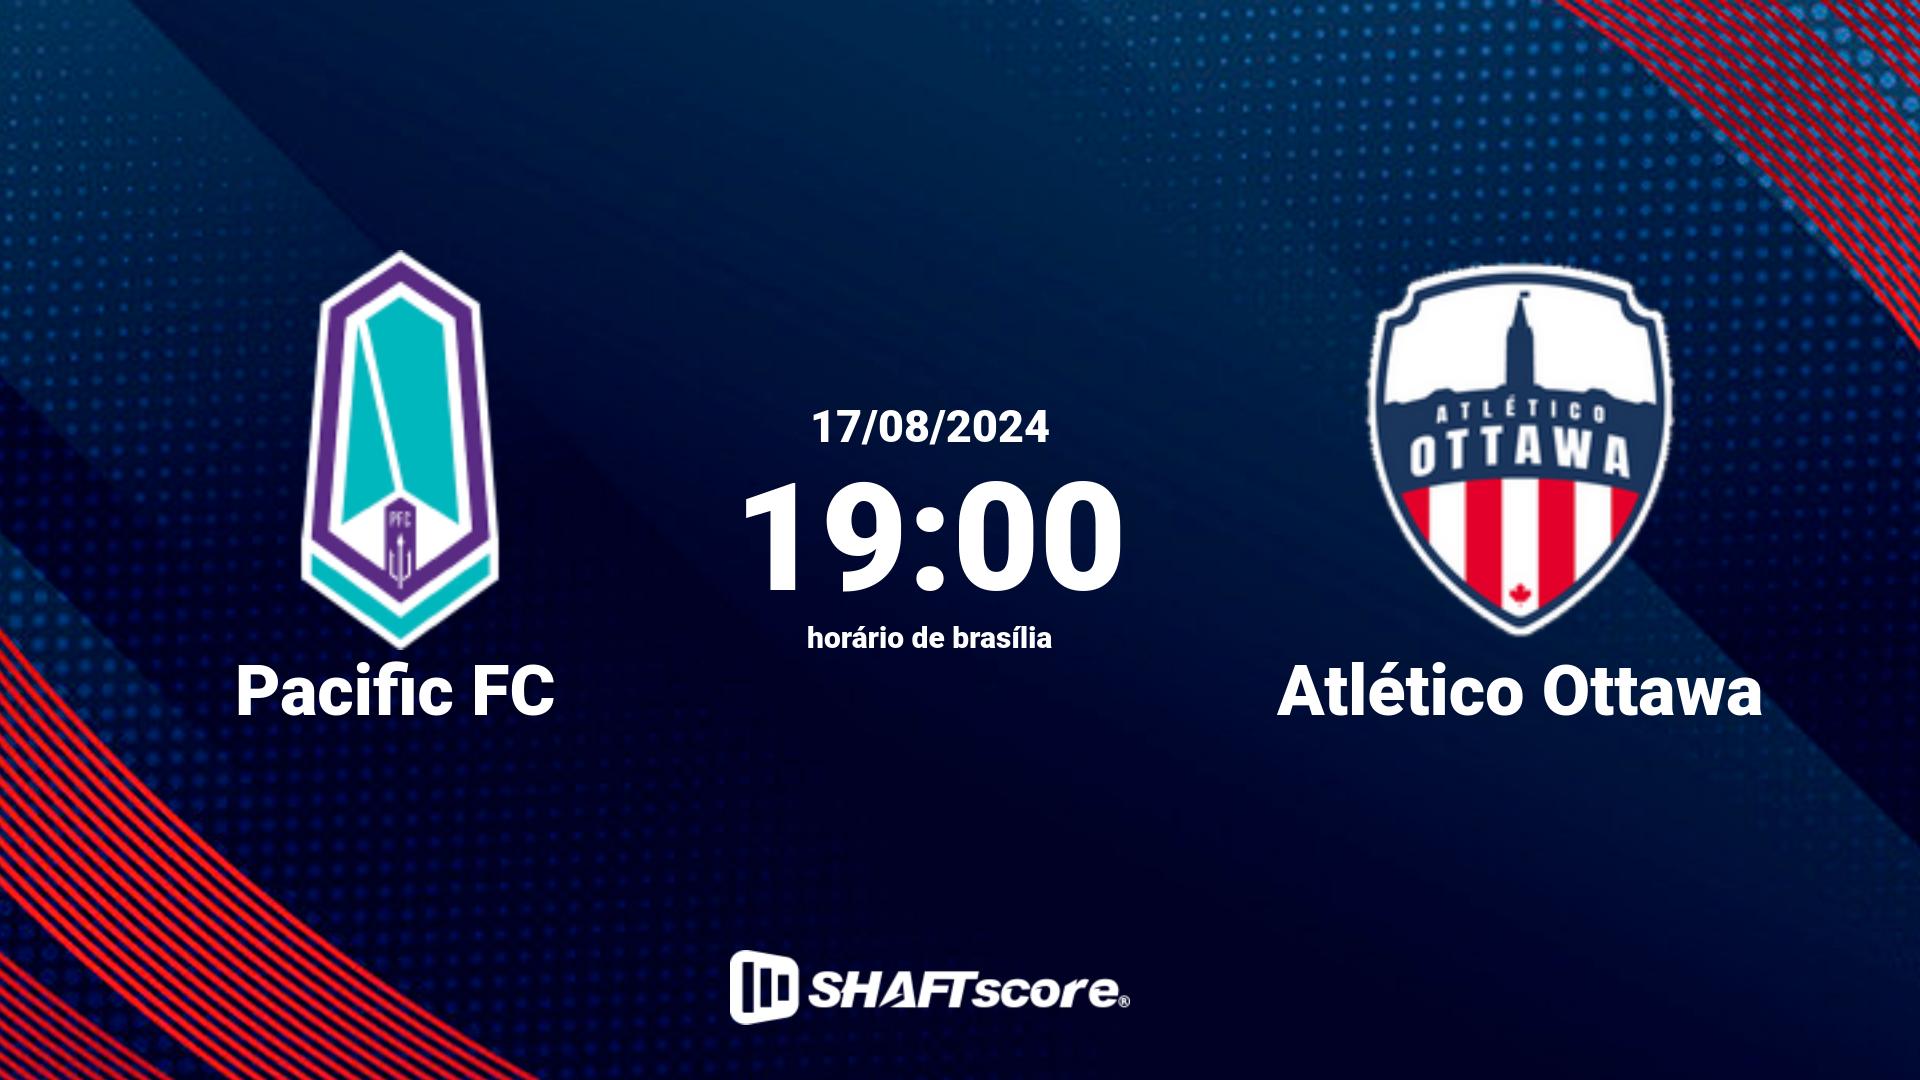 Estatísticas do jogo Pacific FC vs Atlético Ottawa 17.08 19:00